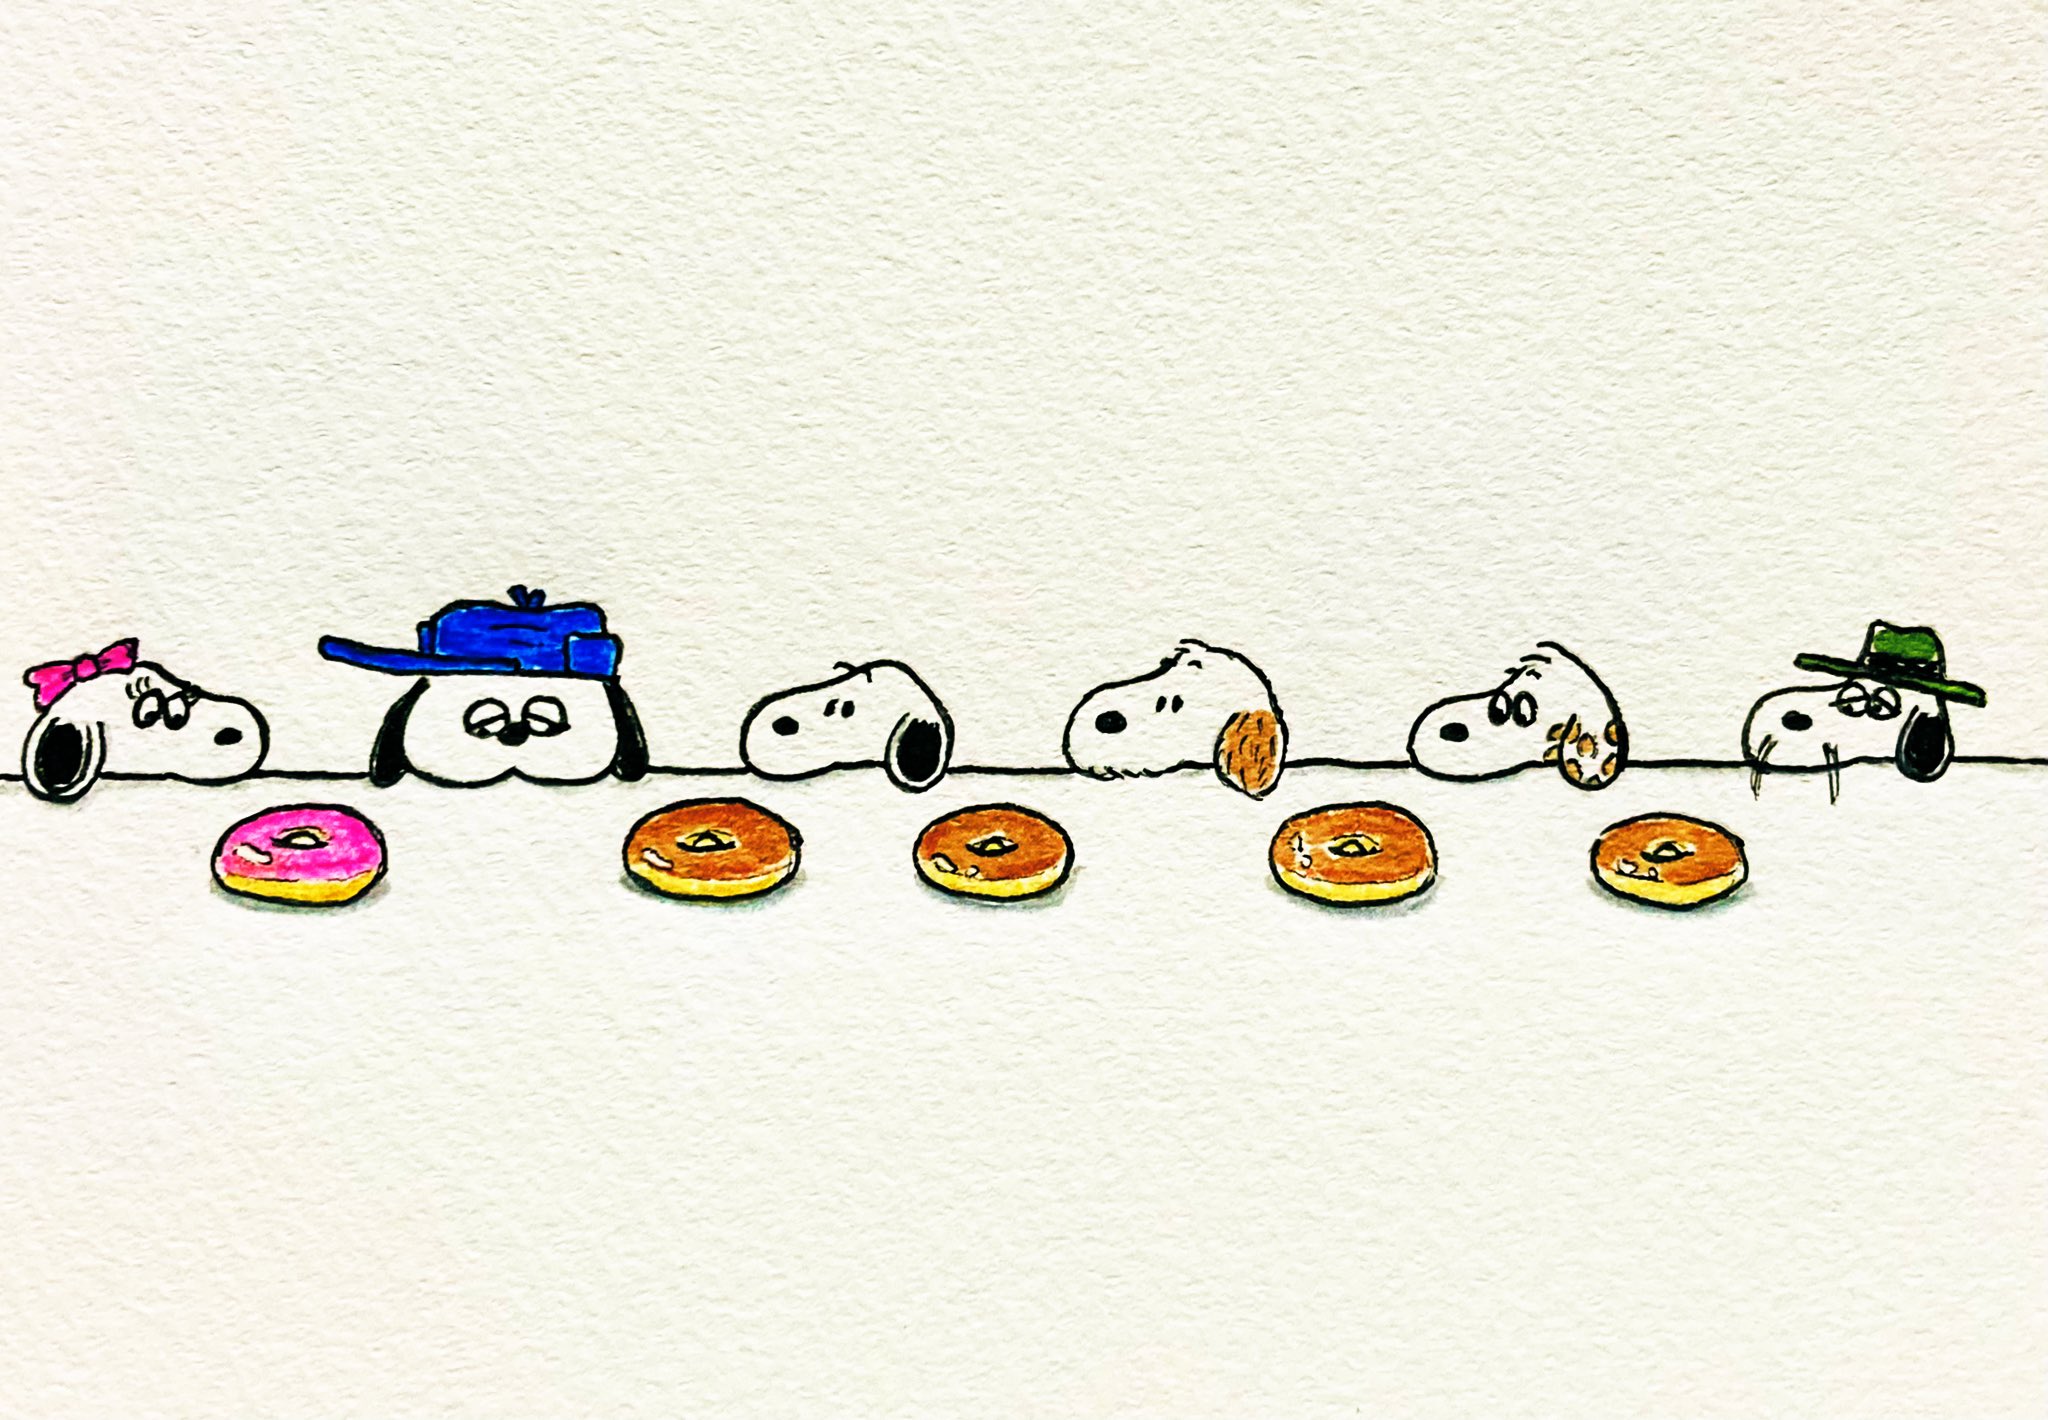 Twitter 上的 Wlfa Snoopy Day270 ベーグルを食べるオラフ 100日後も食べるオラフ アナログイラスト T Co Rjibs3dvo6 Twitter